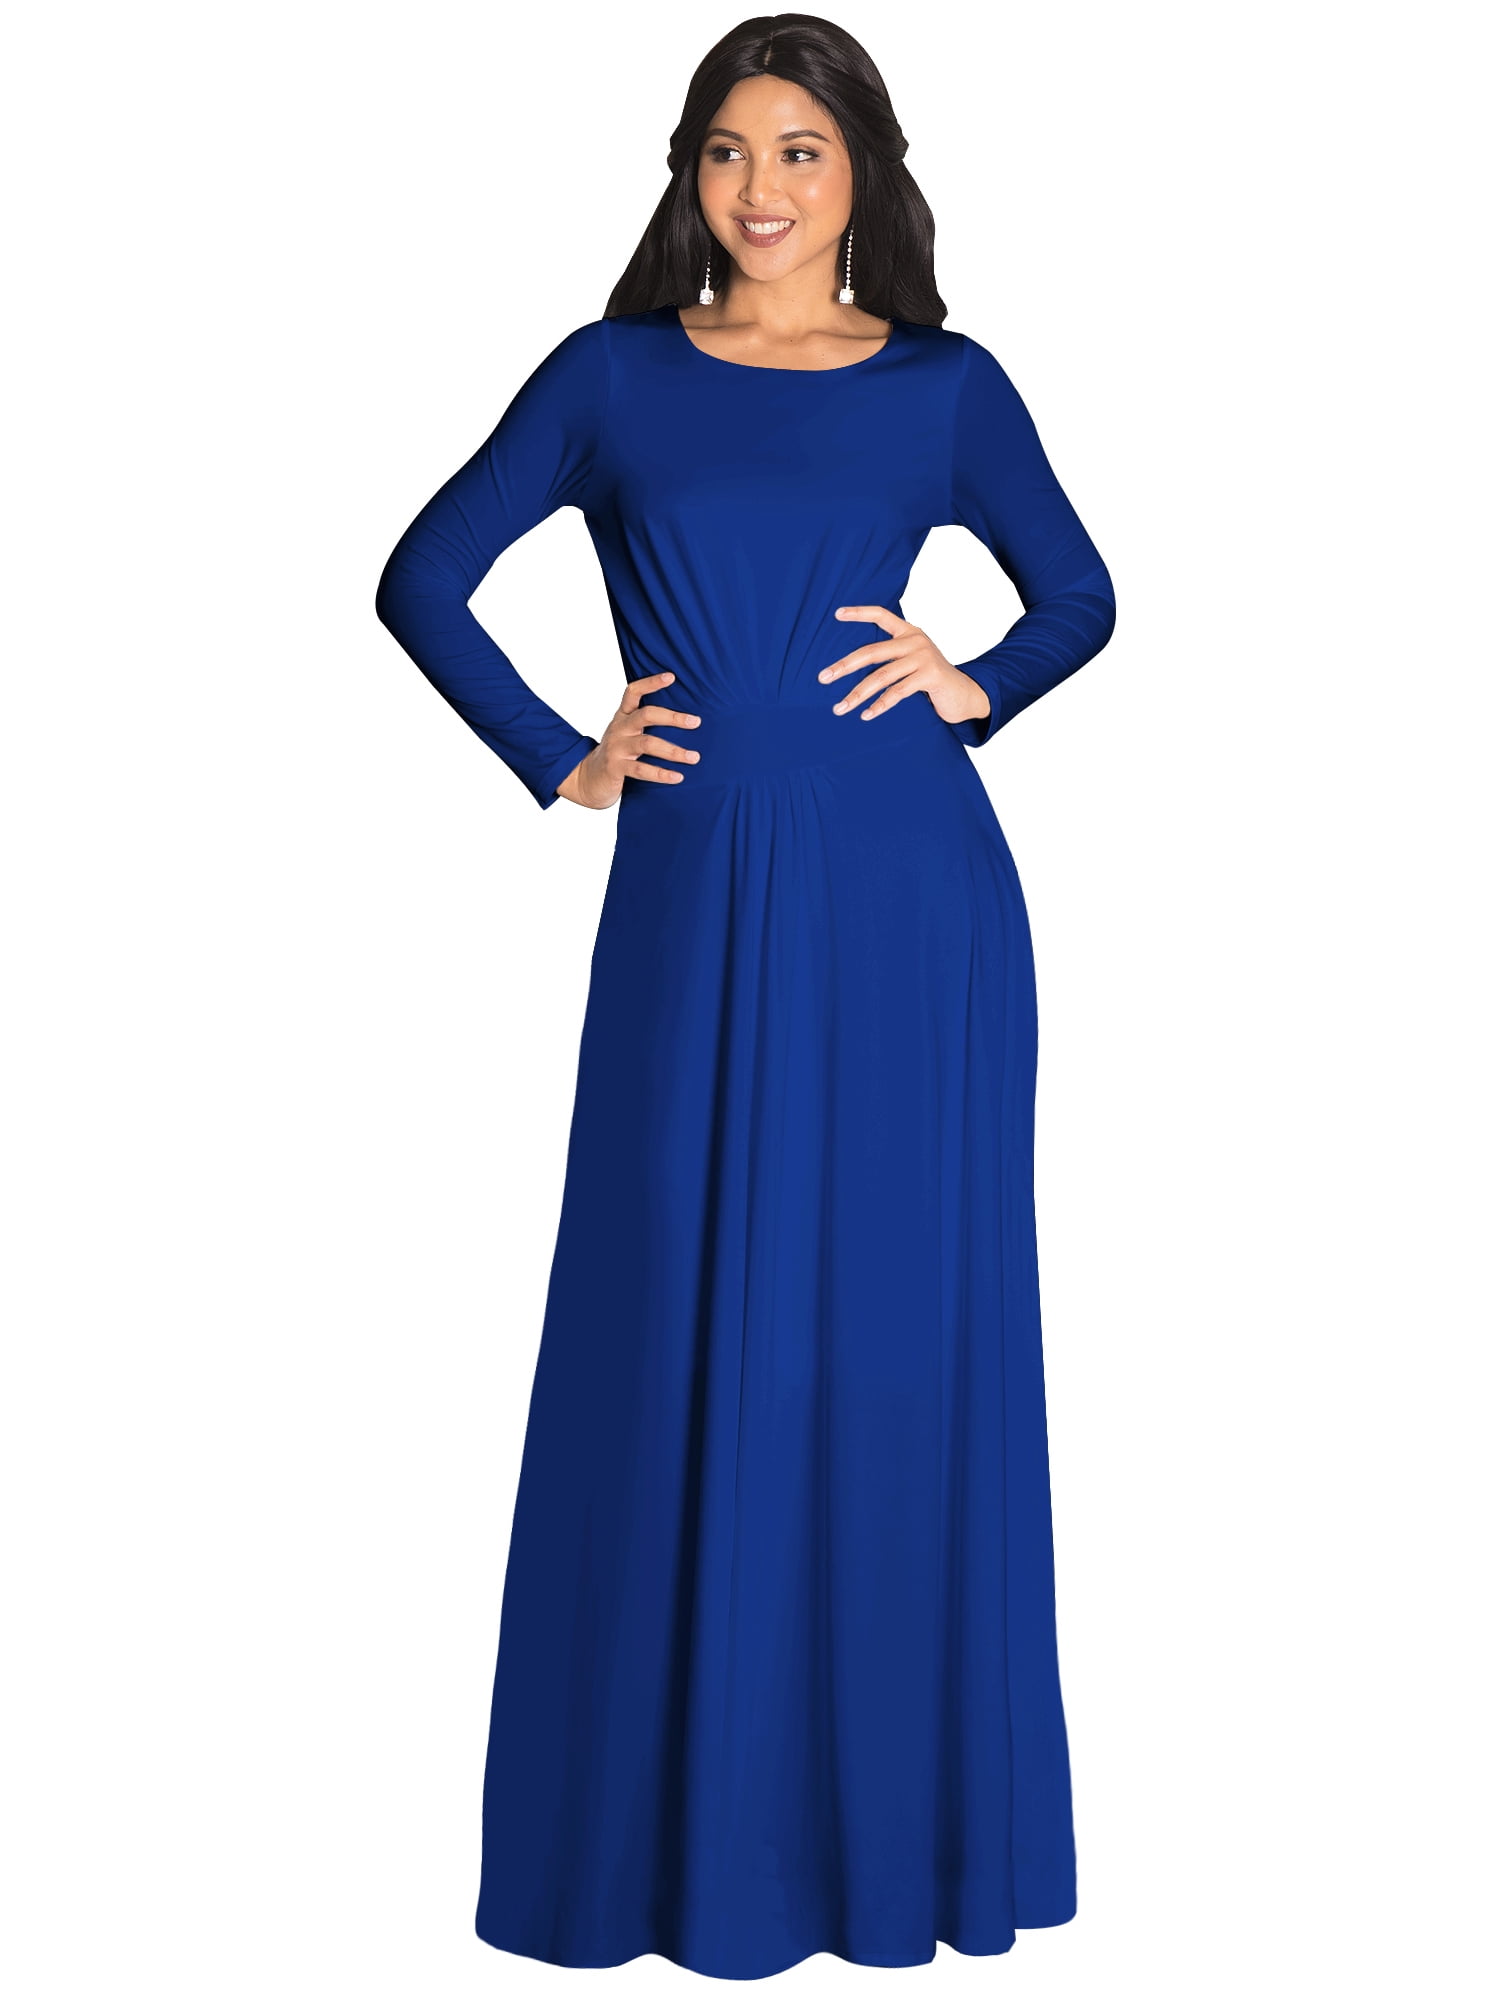 Buy > royal blue flowy maxi dress > in stock